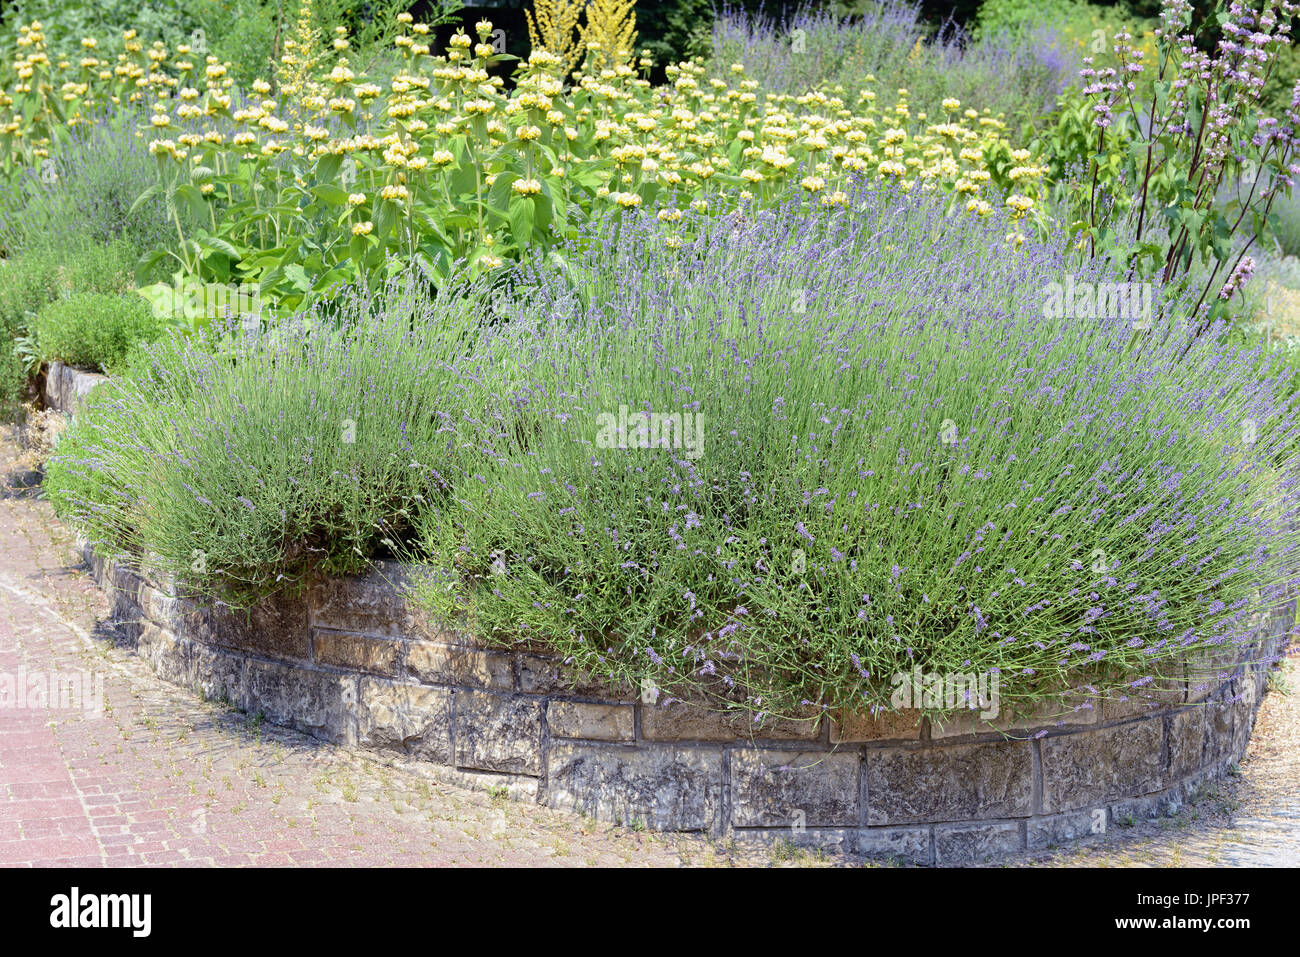 garden with Lavender (Lavandula angustifolia) and Lampwick Plant (Phlomis russeliana) Stock Photo